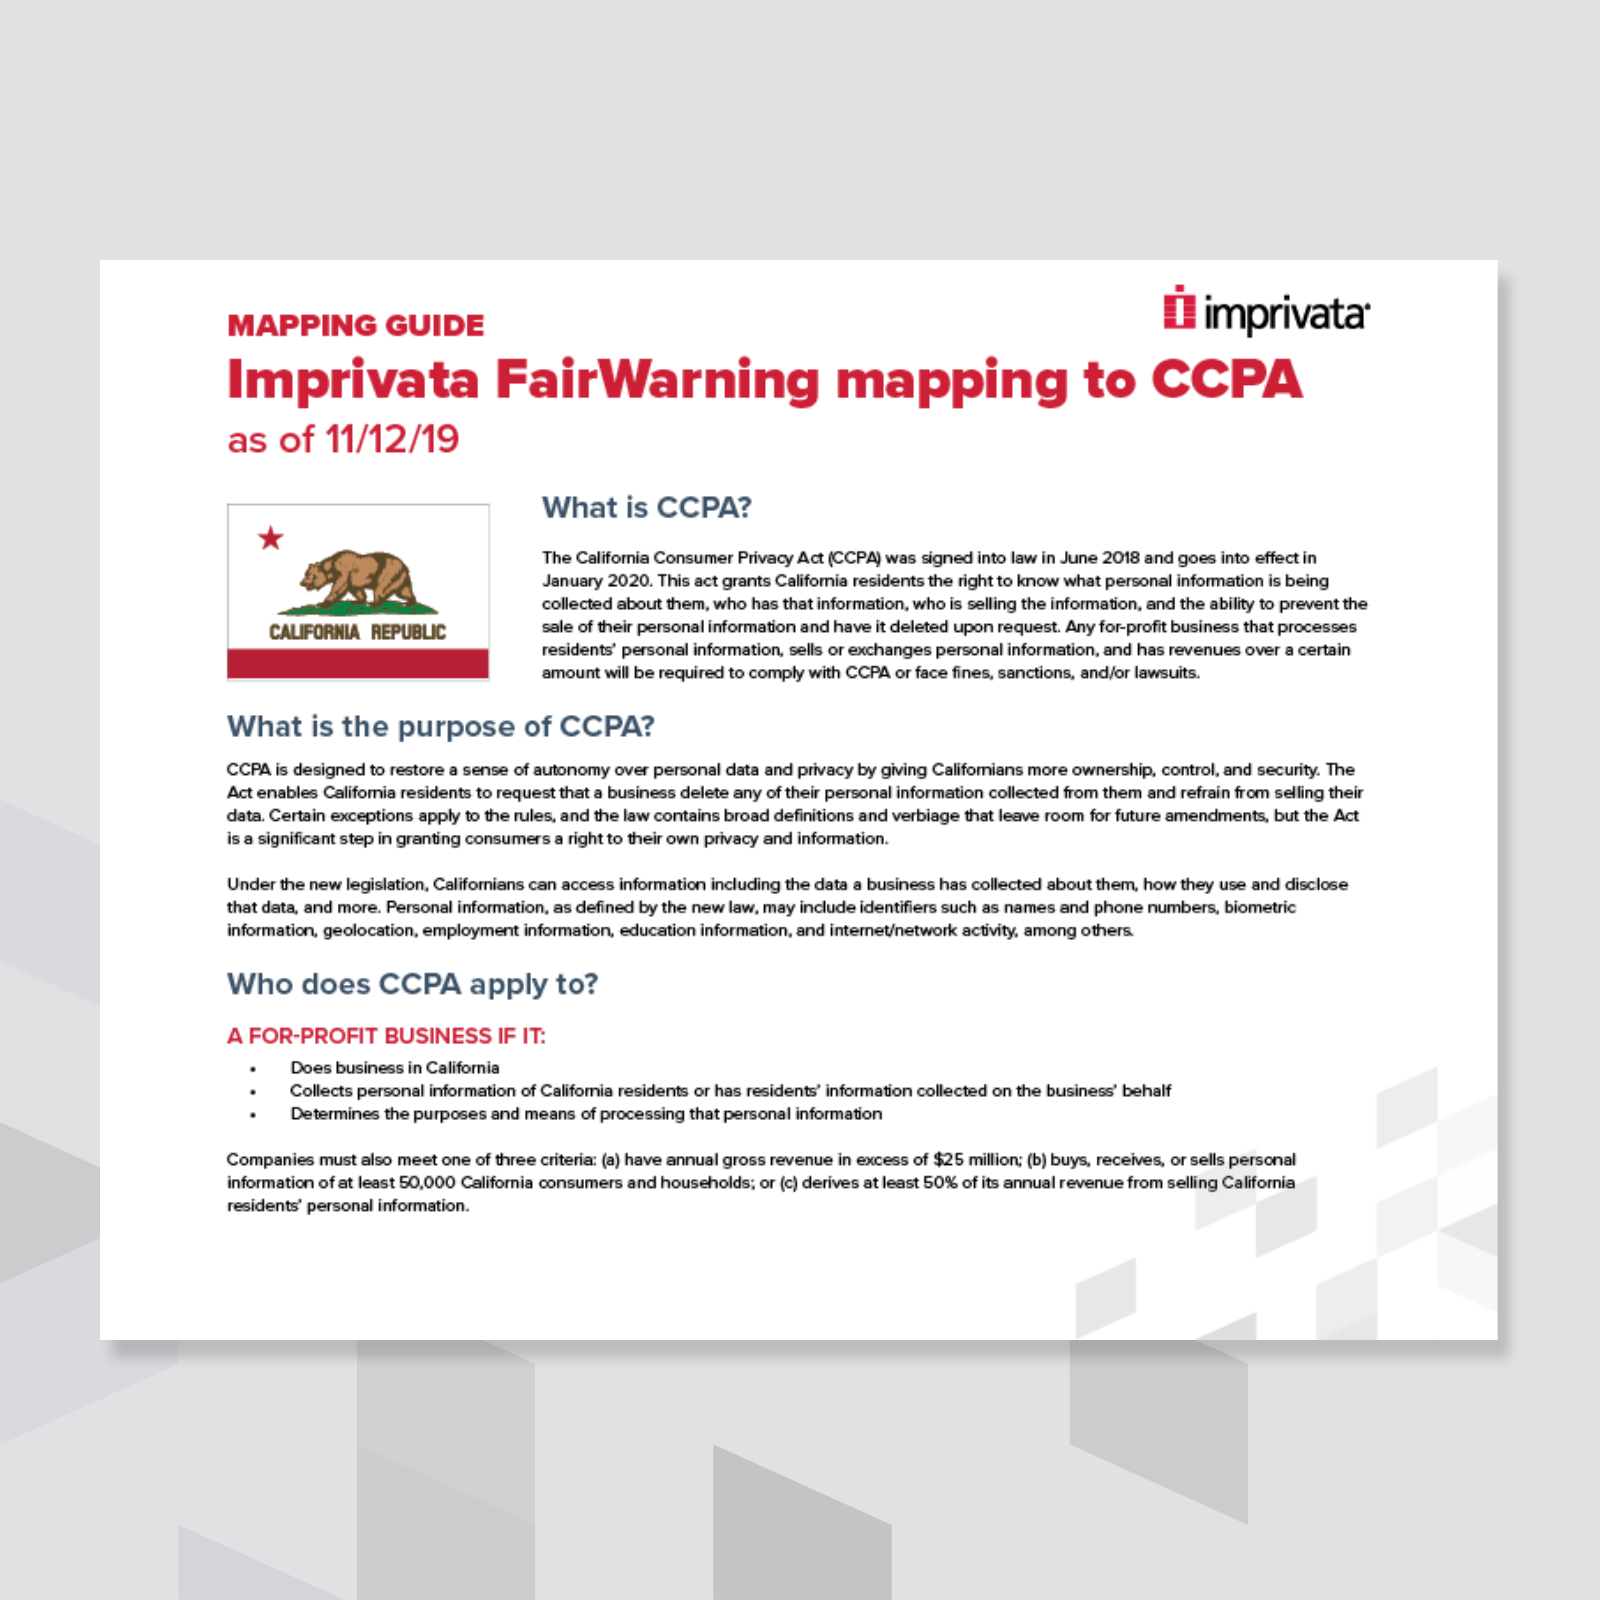 FW-MG-how-imprivata-fairwarning-maps-to-CCPA